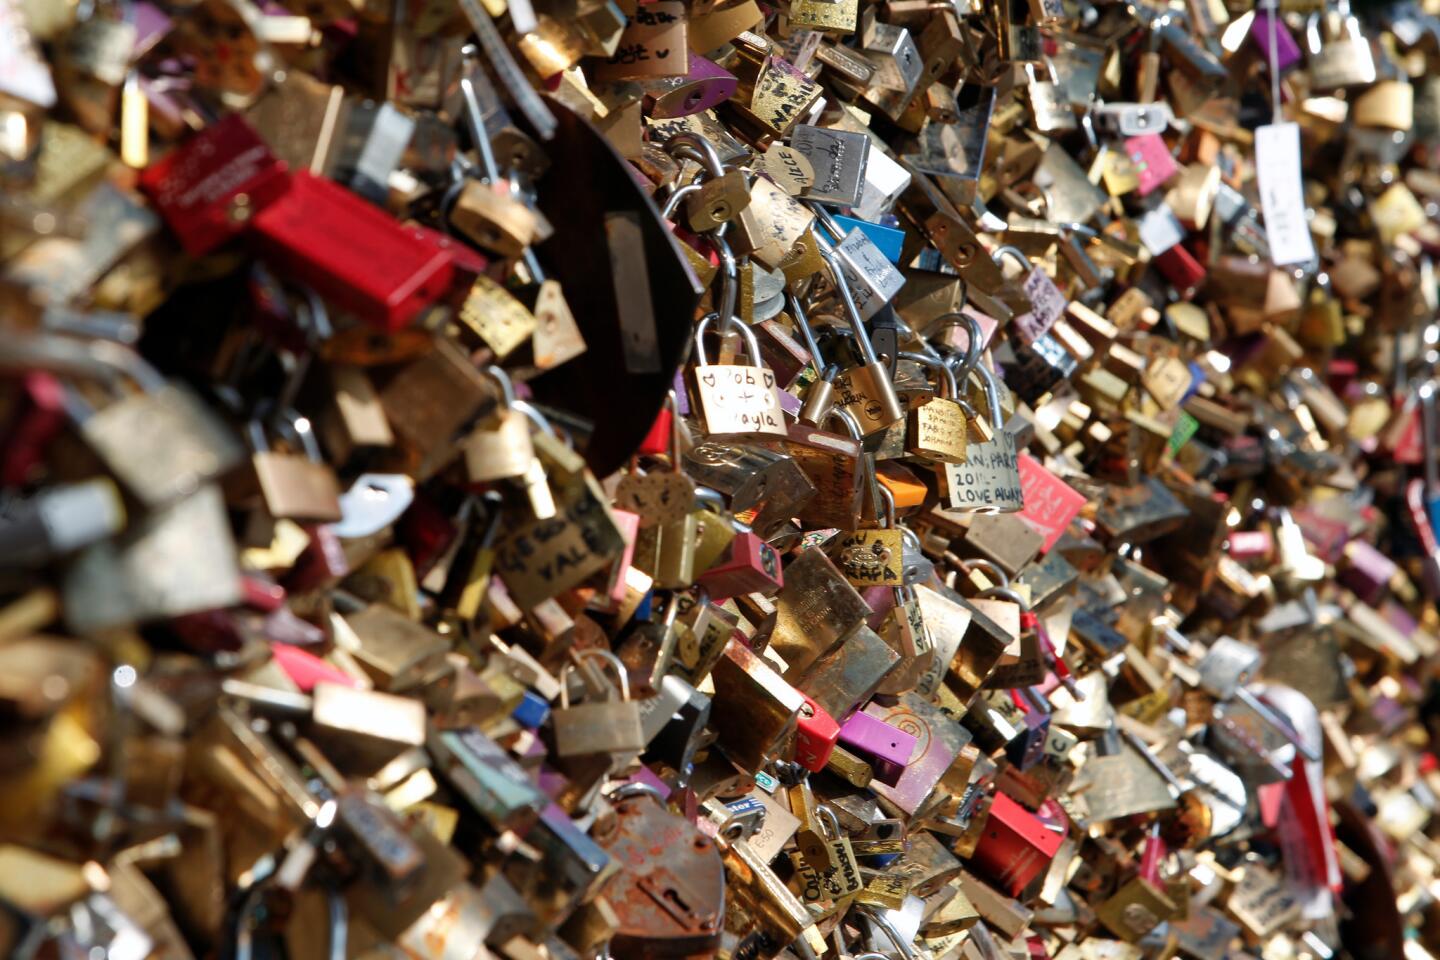 D.C. Removes 'Love Locks' from Key Bridge